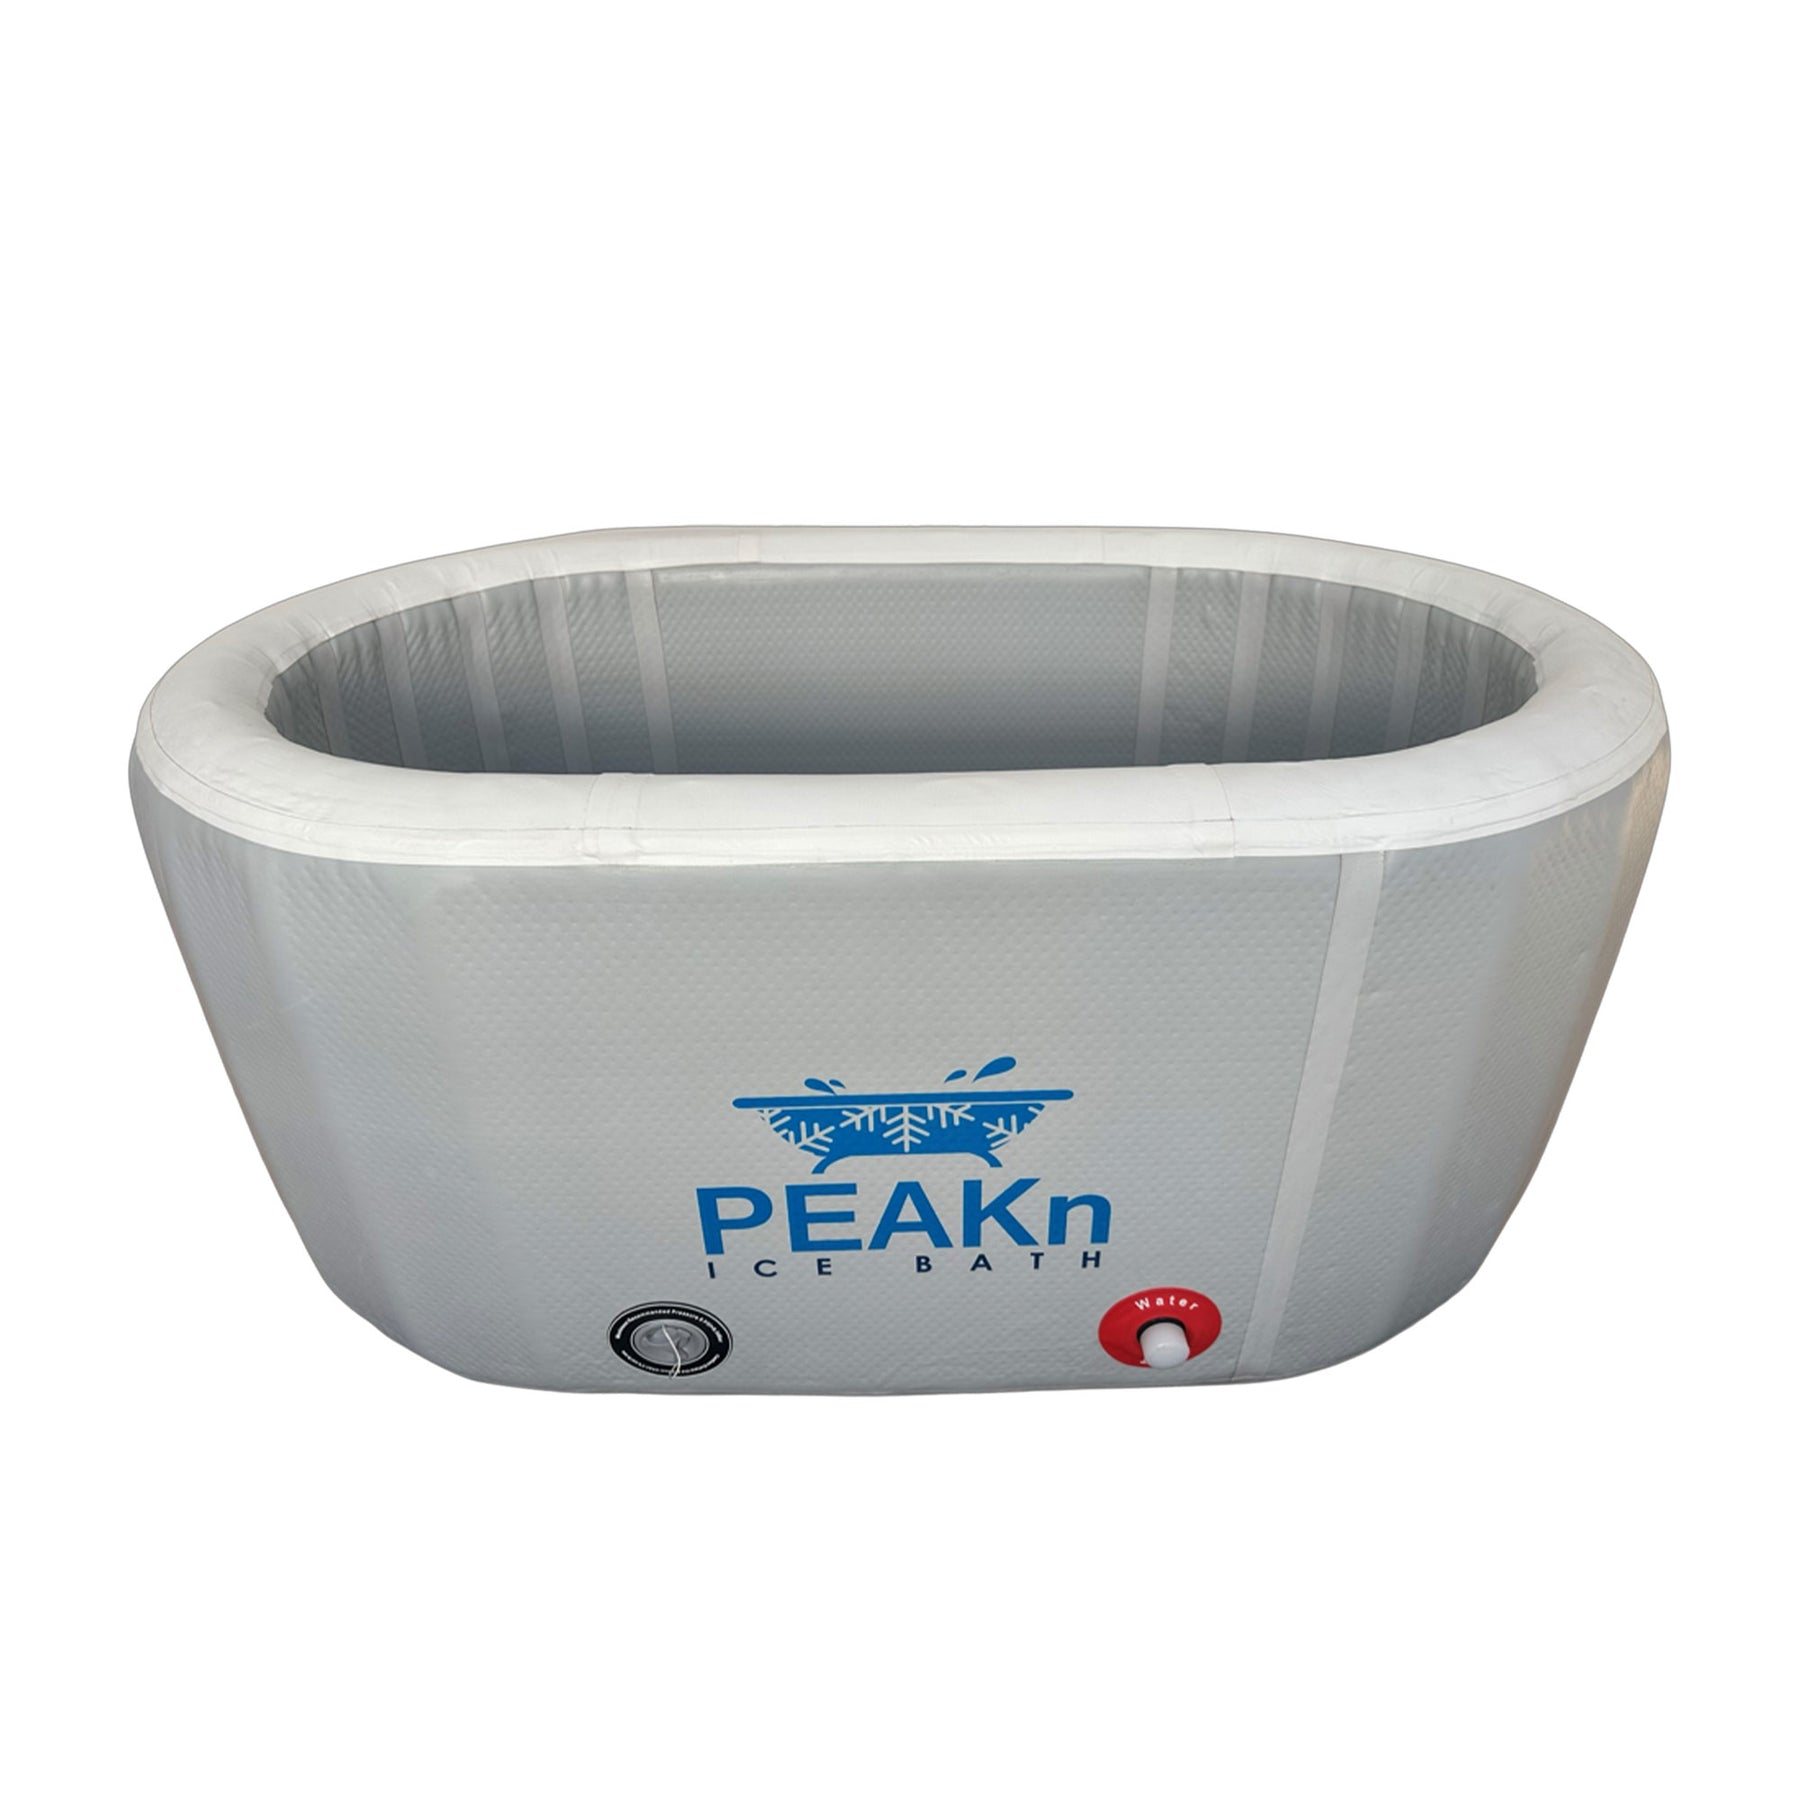 Peakn Ice Bath PK005